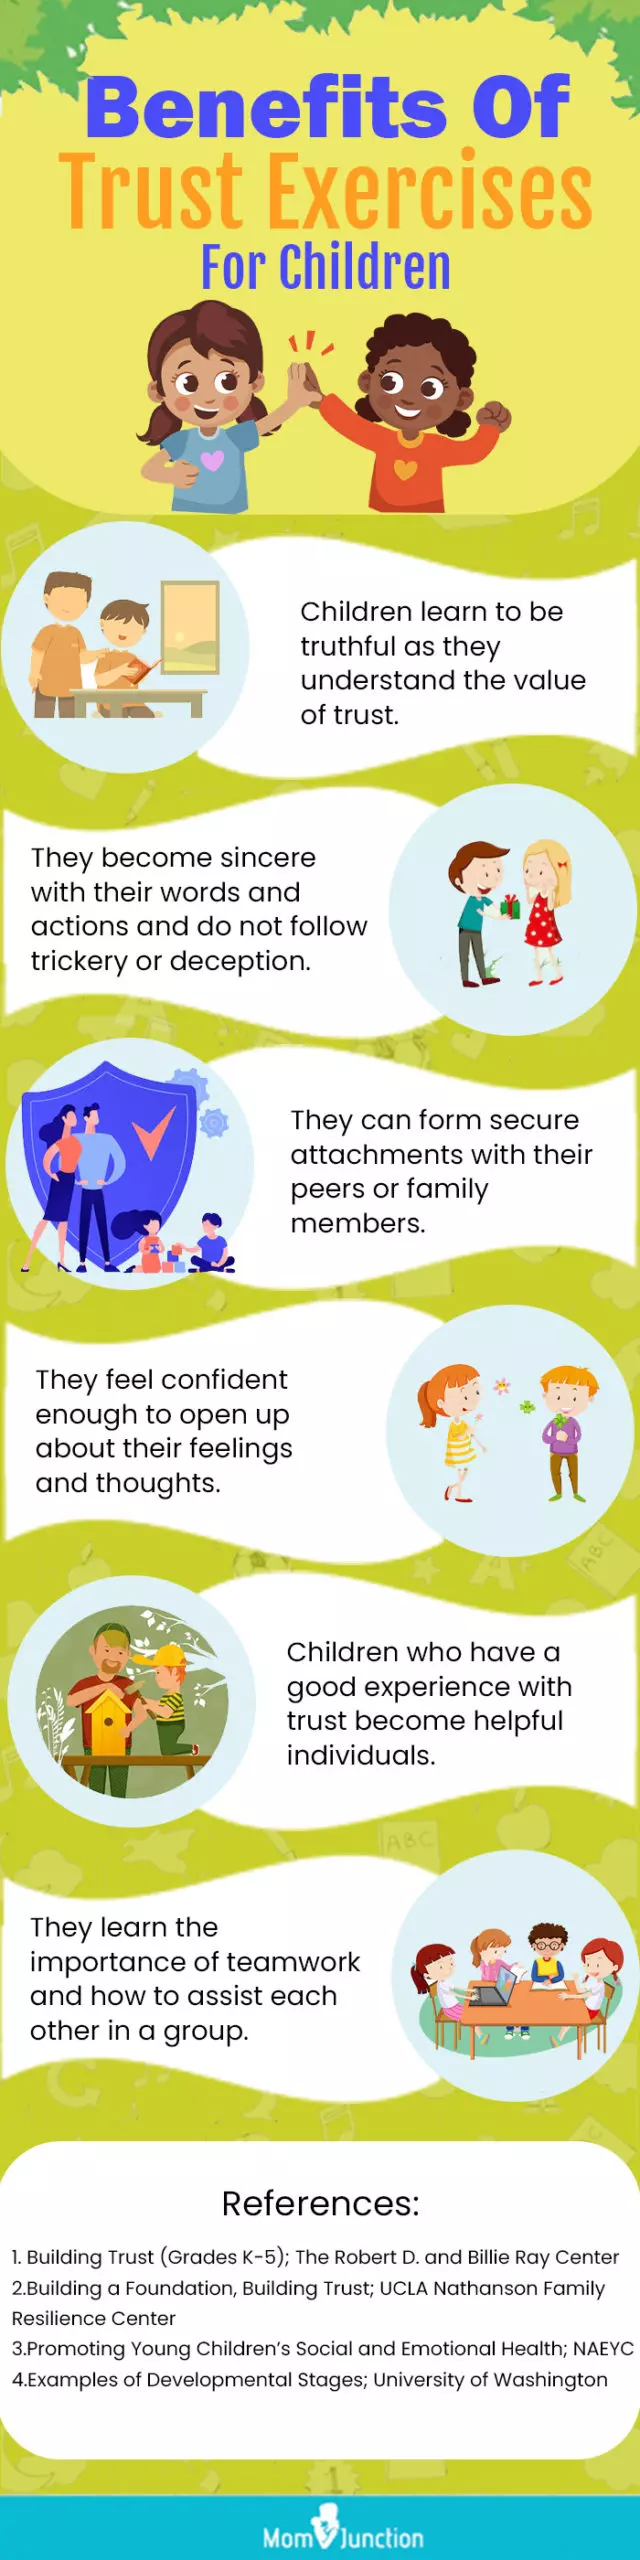 benefits of trust exercises for children (infographic)